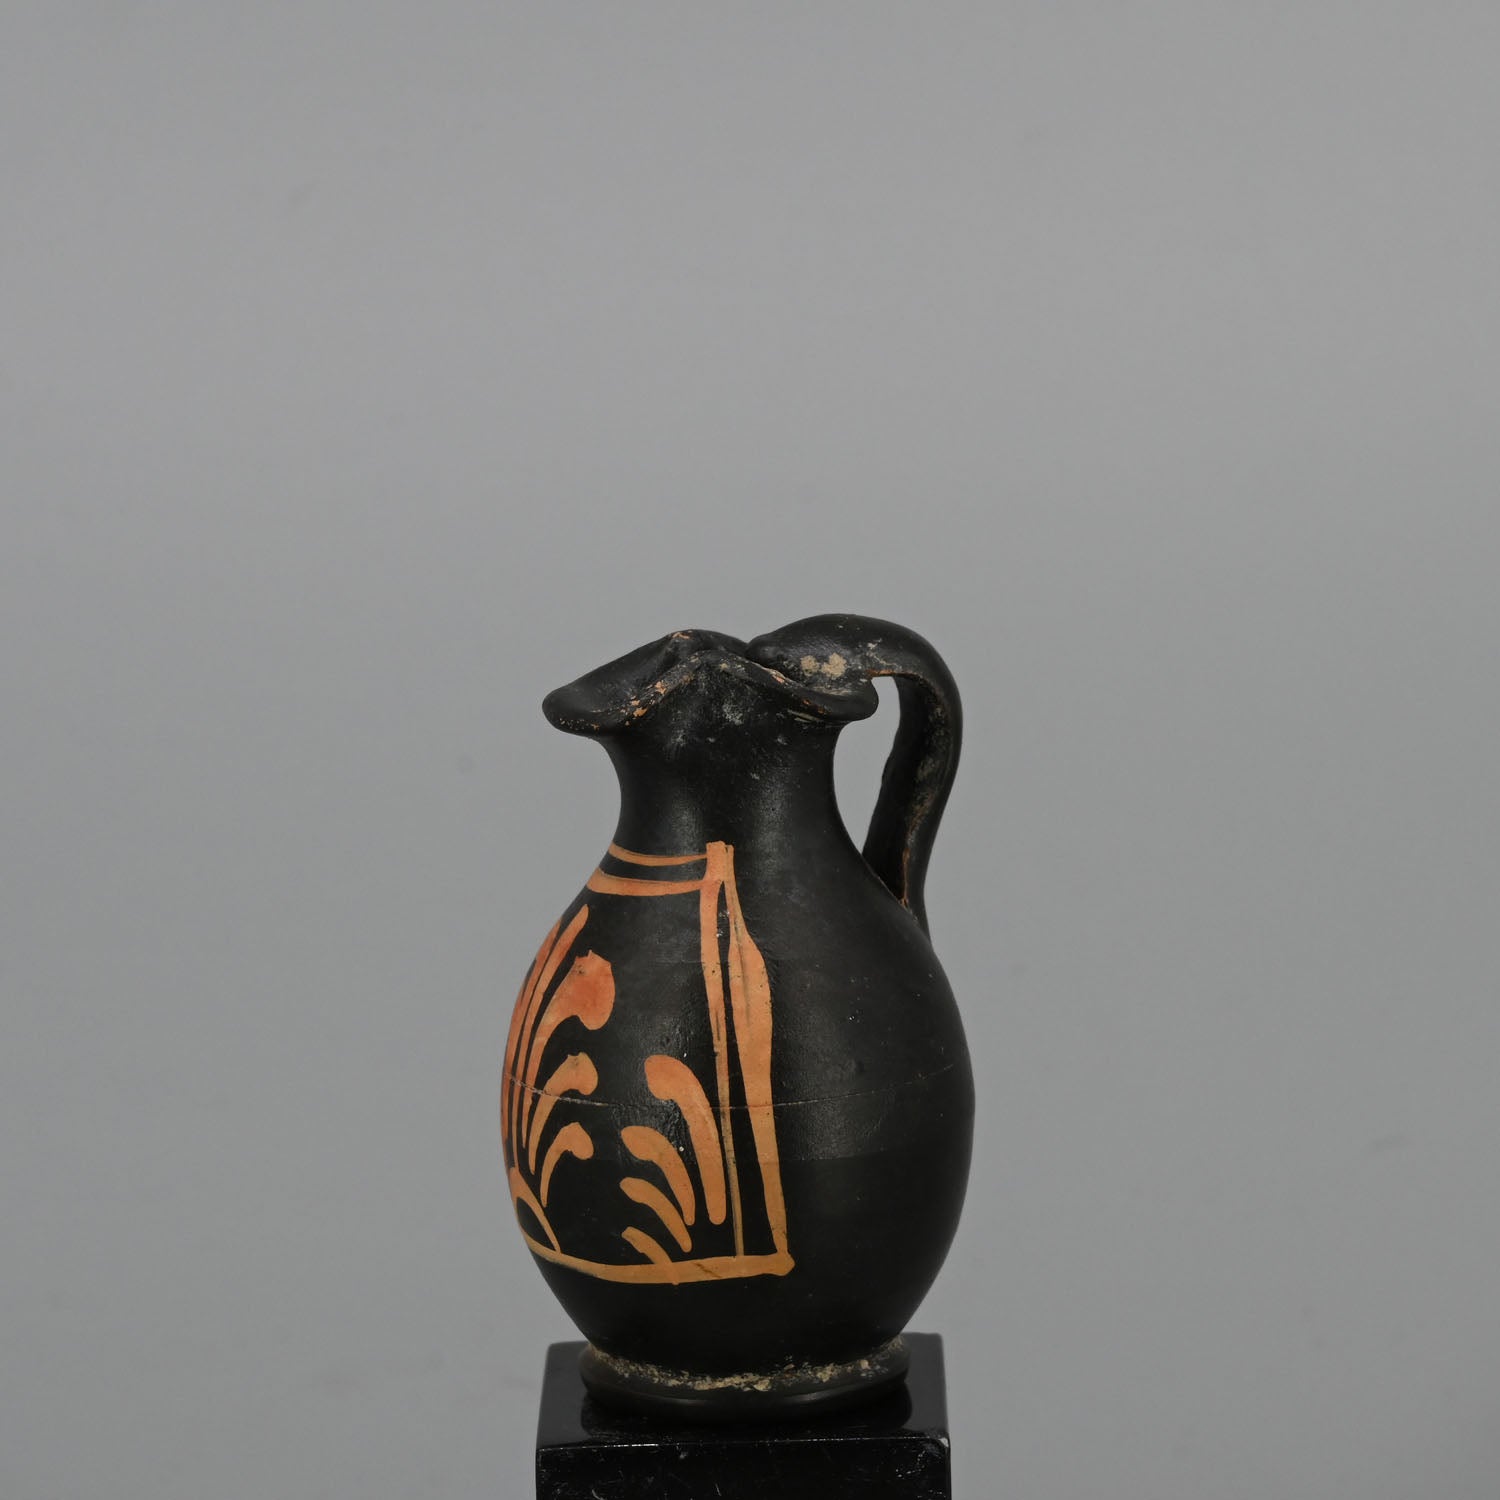 An Apulian Xenonware Miniature Oinochoe, ca. 4th century CE